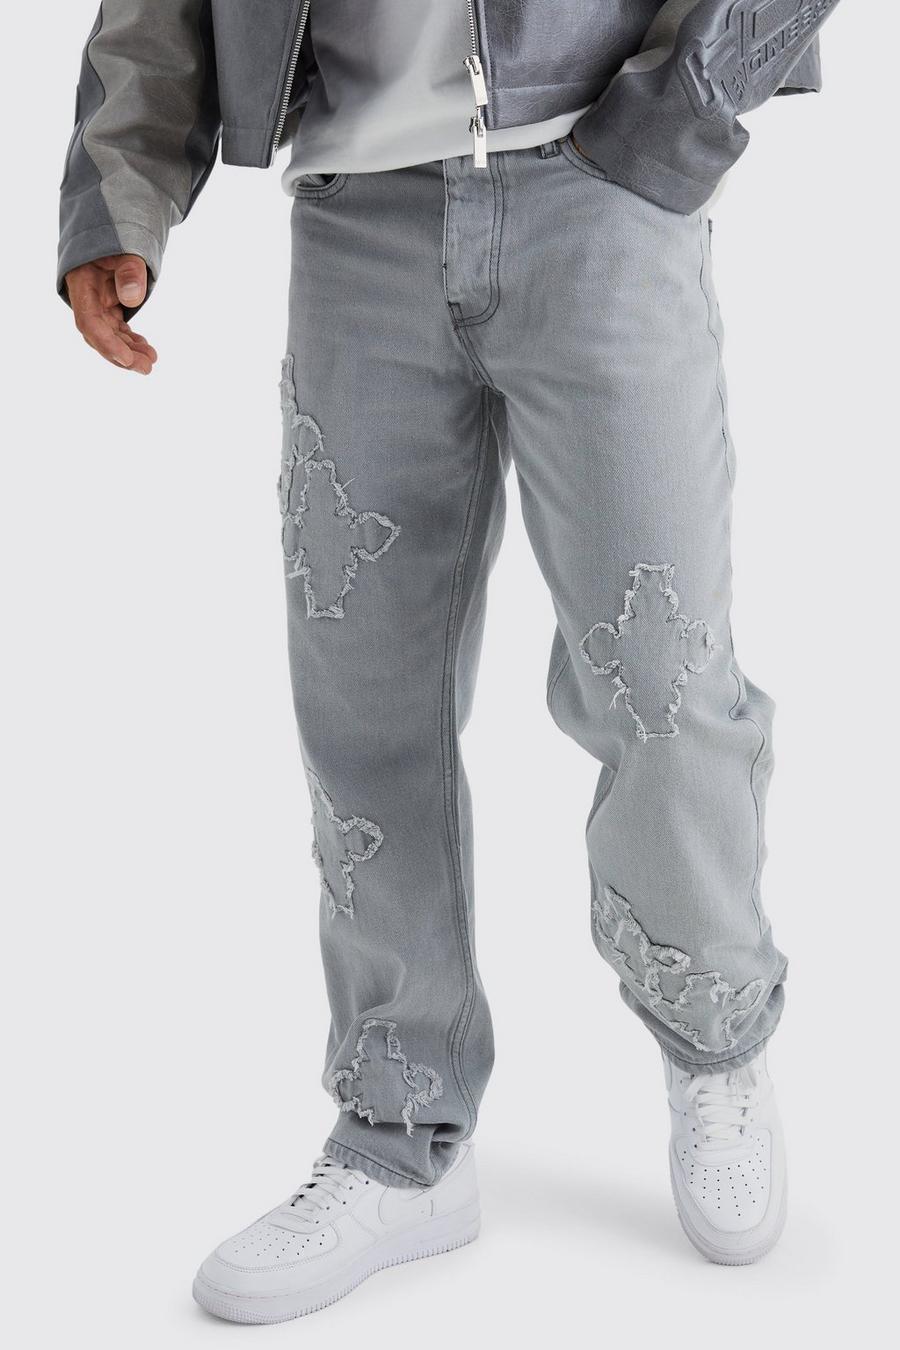 Lockere Jeans mit rohem Saum und Kreuz-Applikation, Ice grey